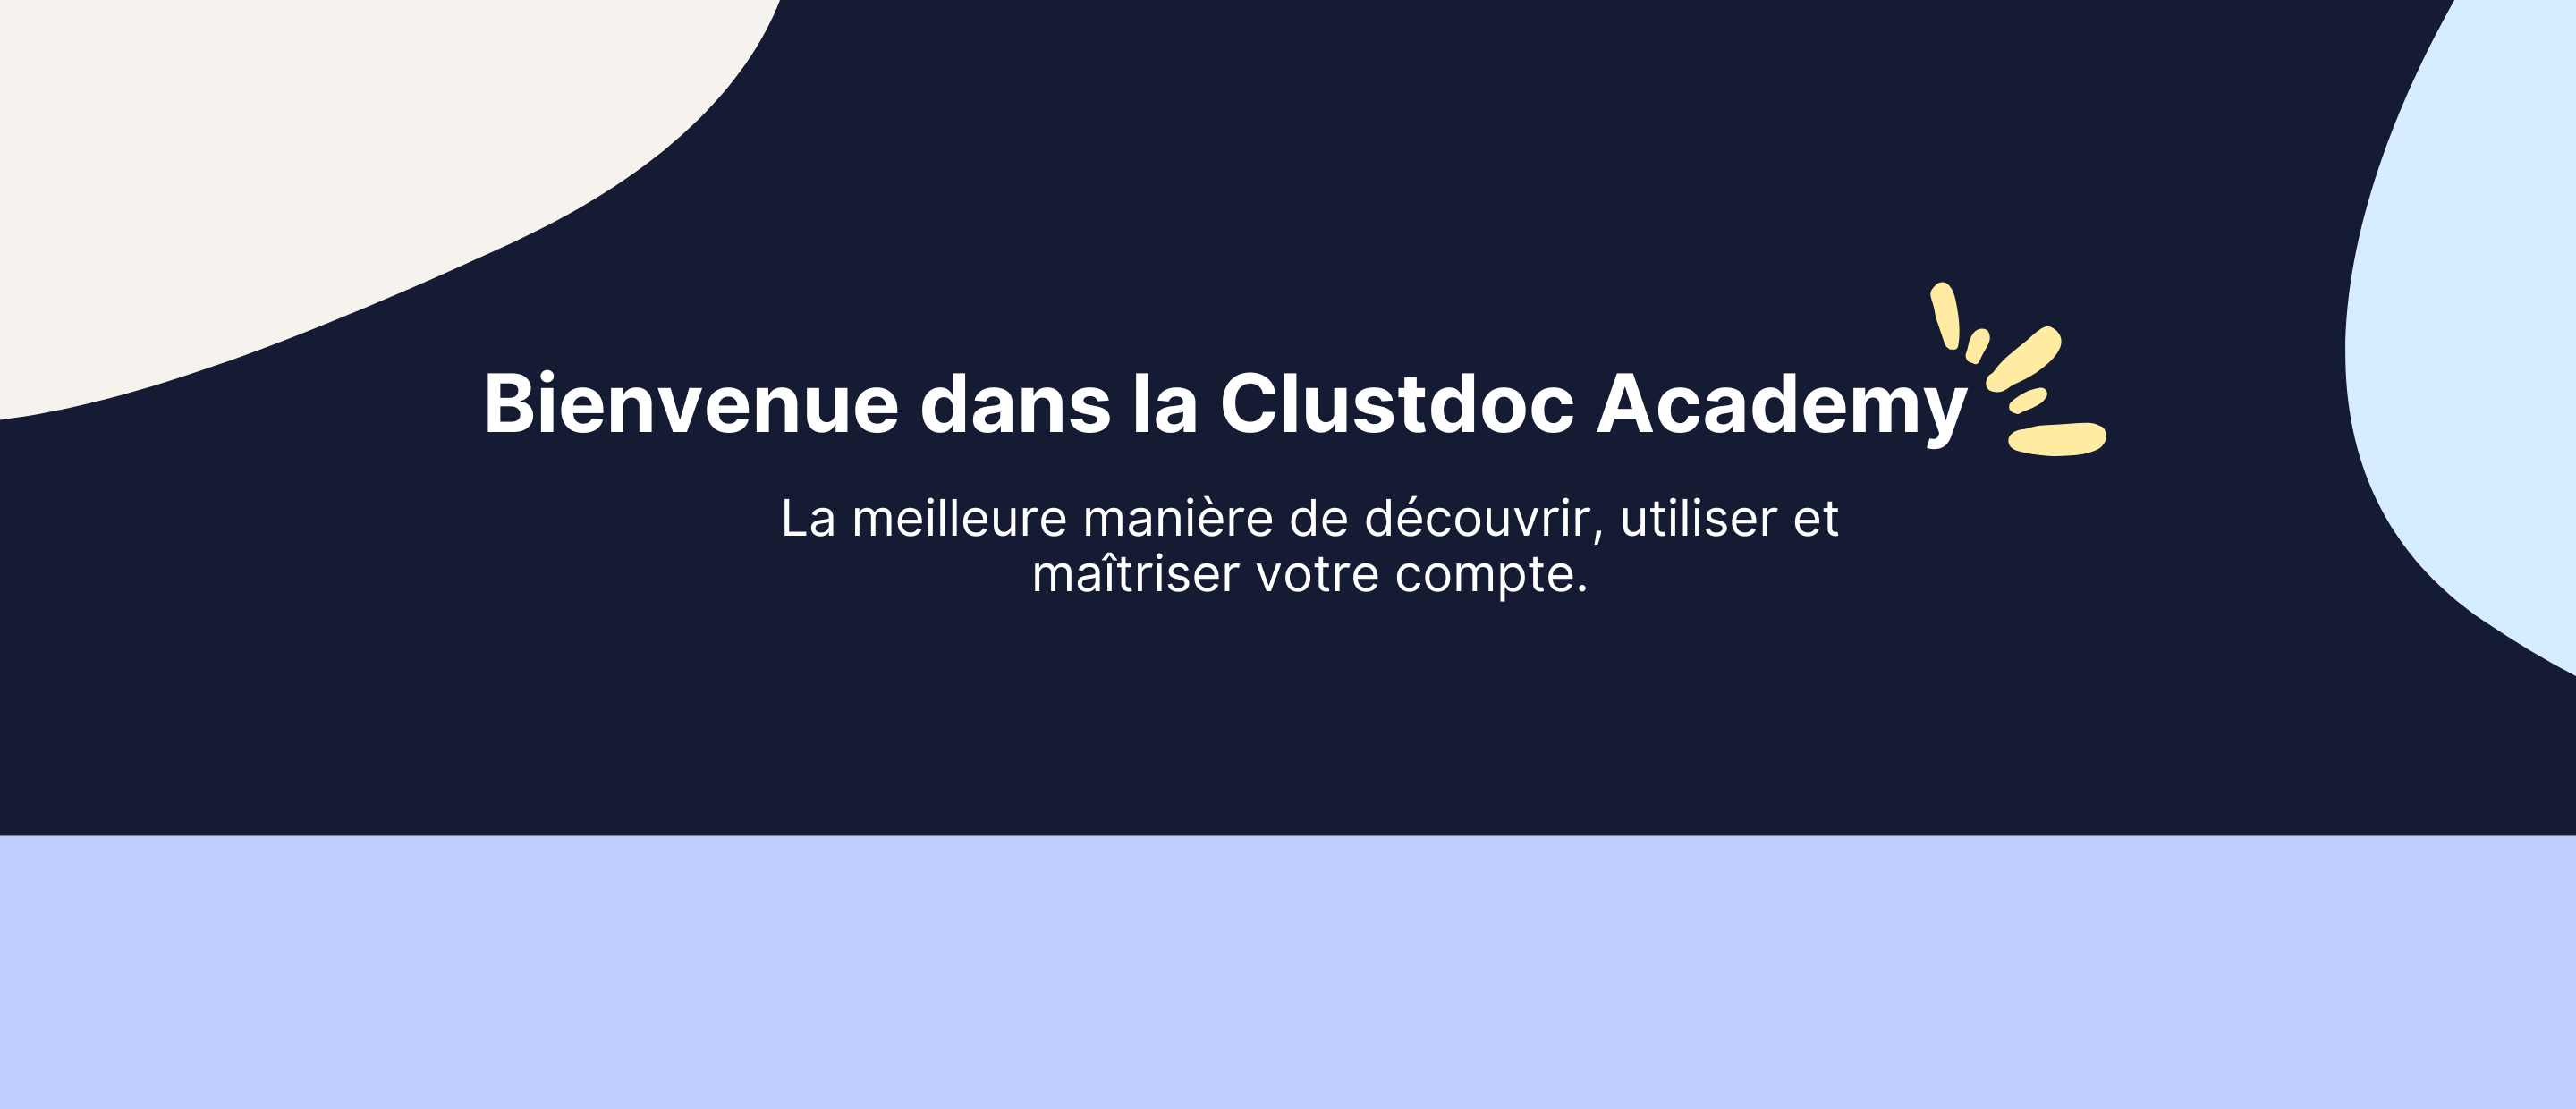 Bienvenue dans la Clustdoc Academy 